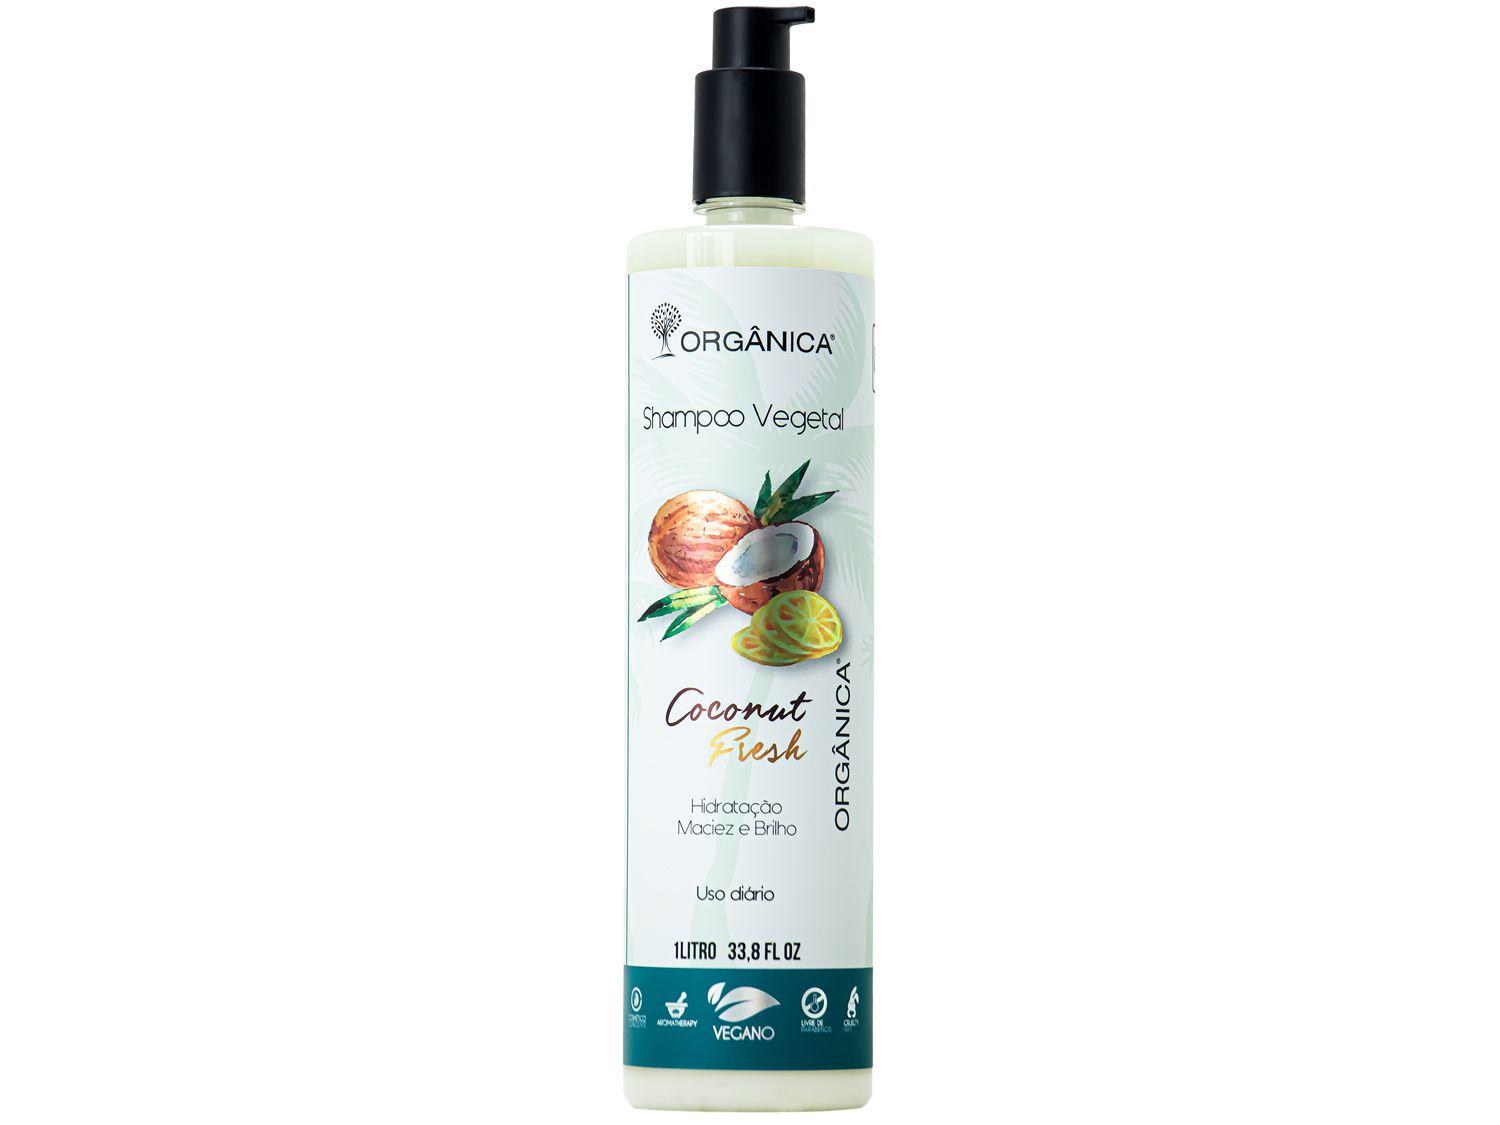 Shampoo Orgânica Puro Vegetal Coconut Fresh - 1L